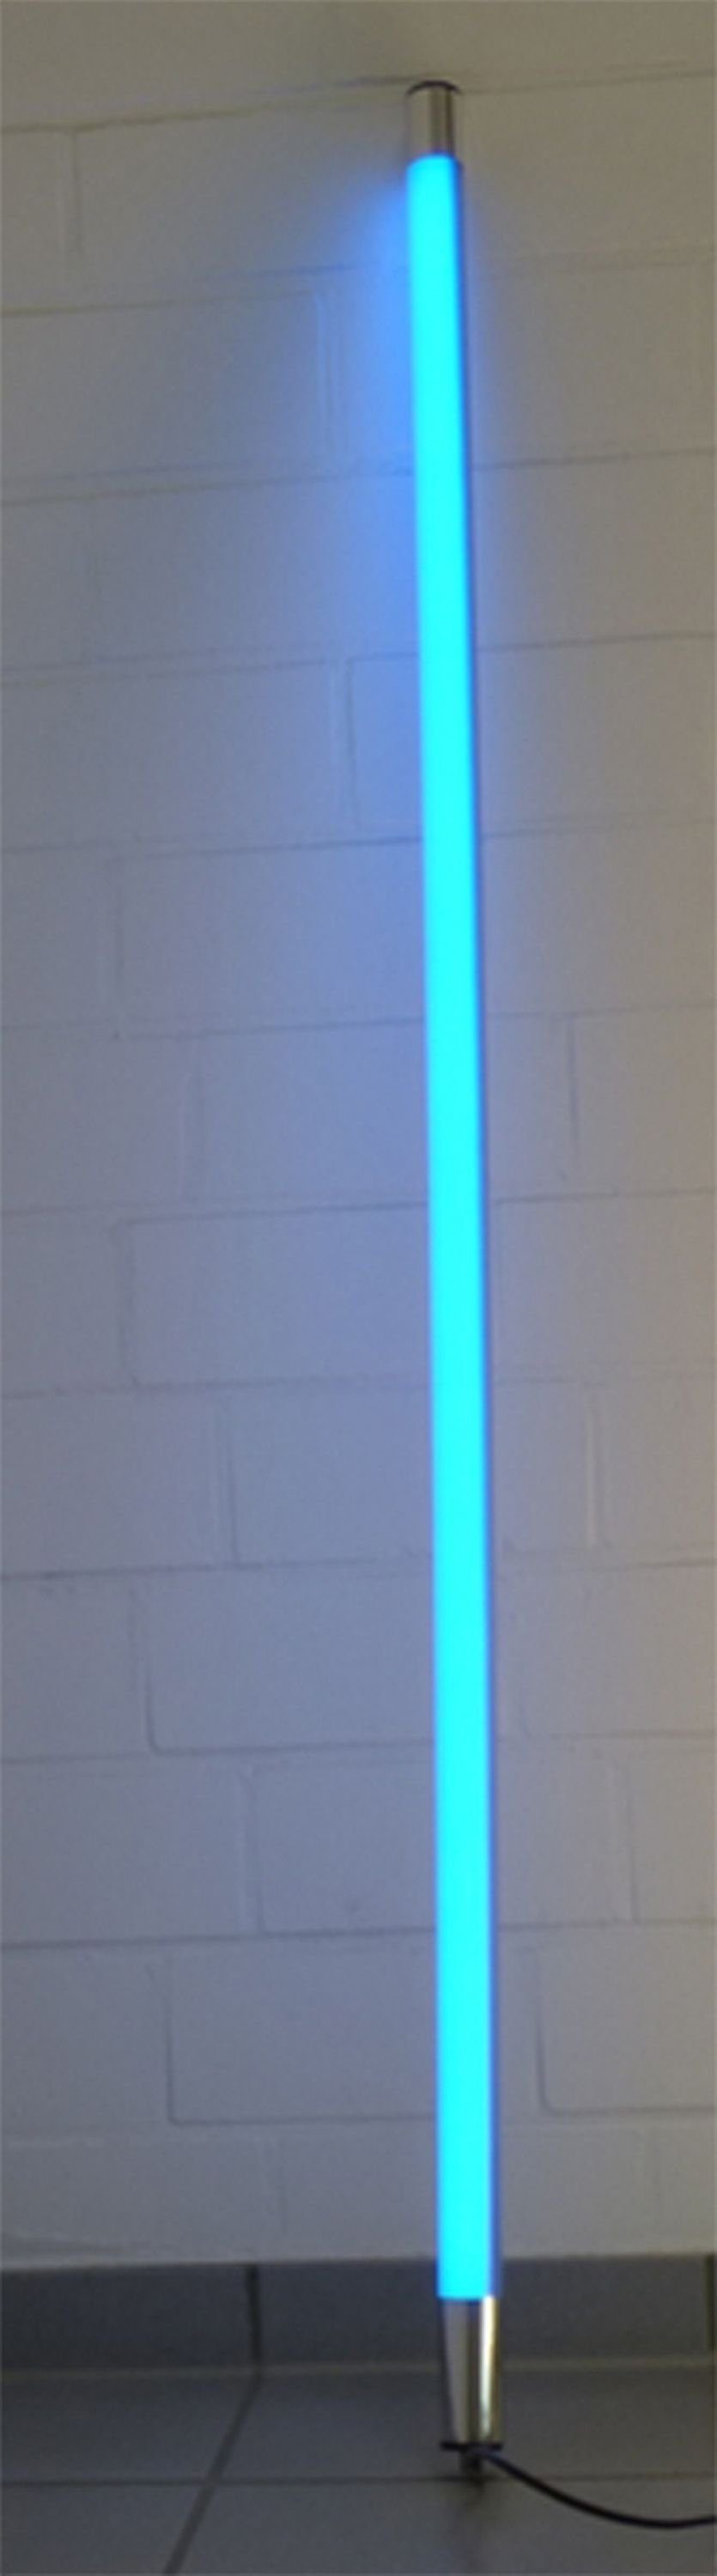 XENON LED Wandleuchte 6482 LED Leuchtstab Satiniert 1,23m Länge 1700 Lumen IP20 Innen Blau, LED Röhre T8, Xenon